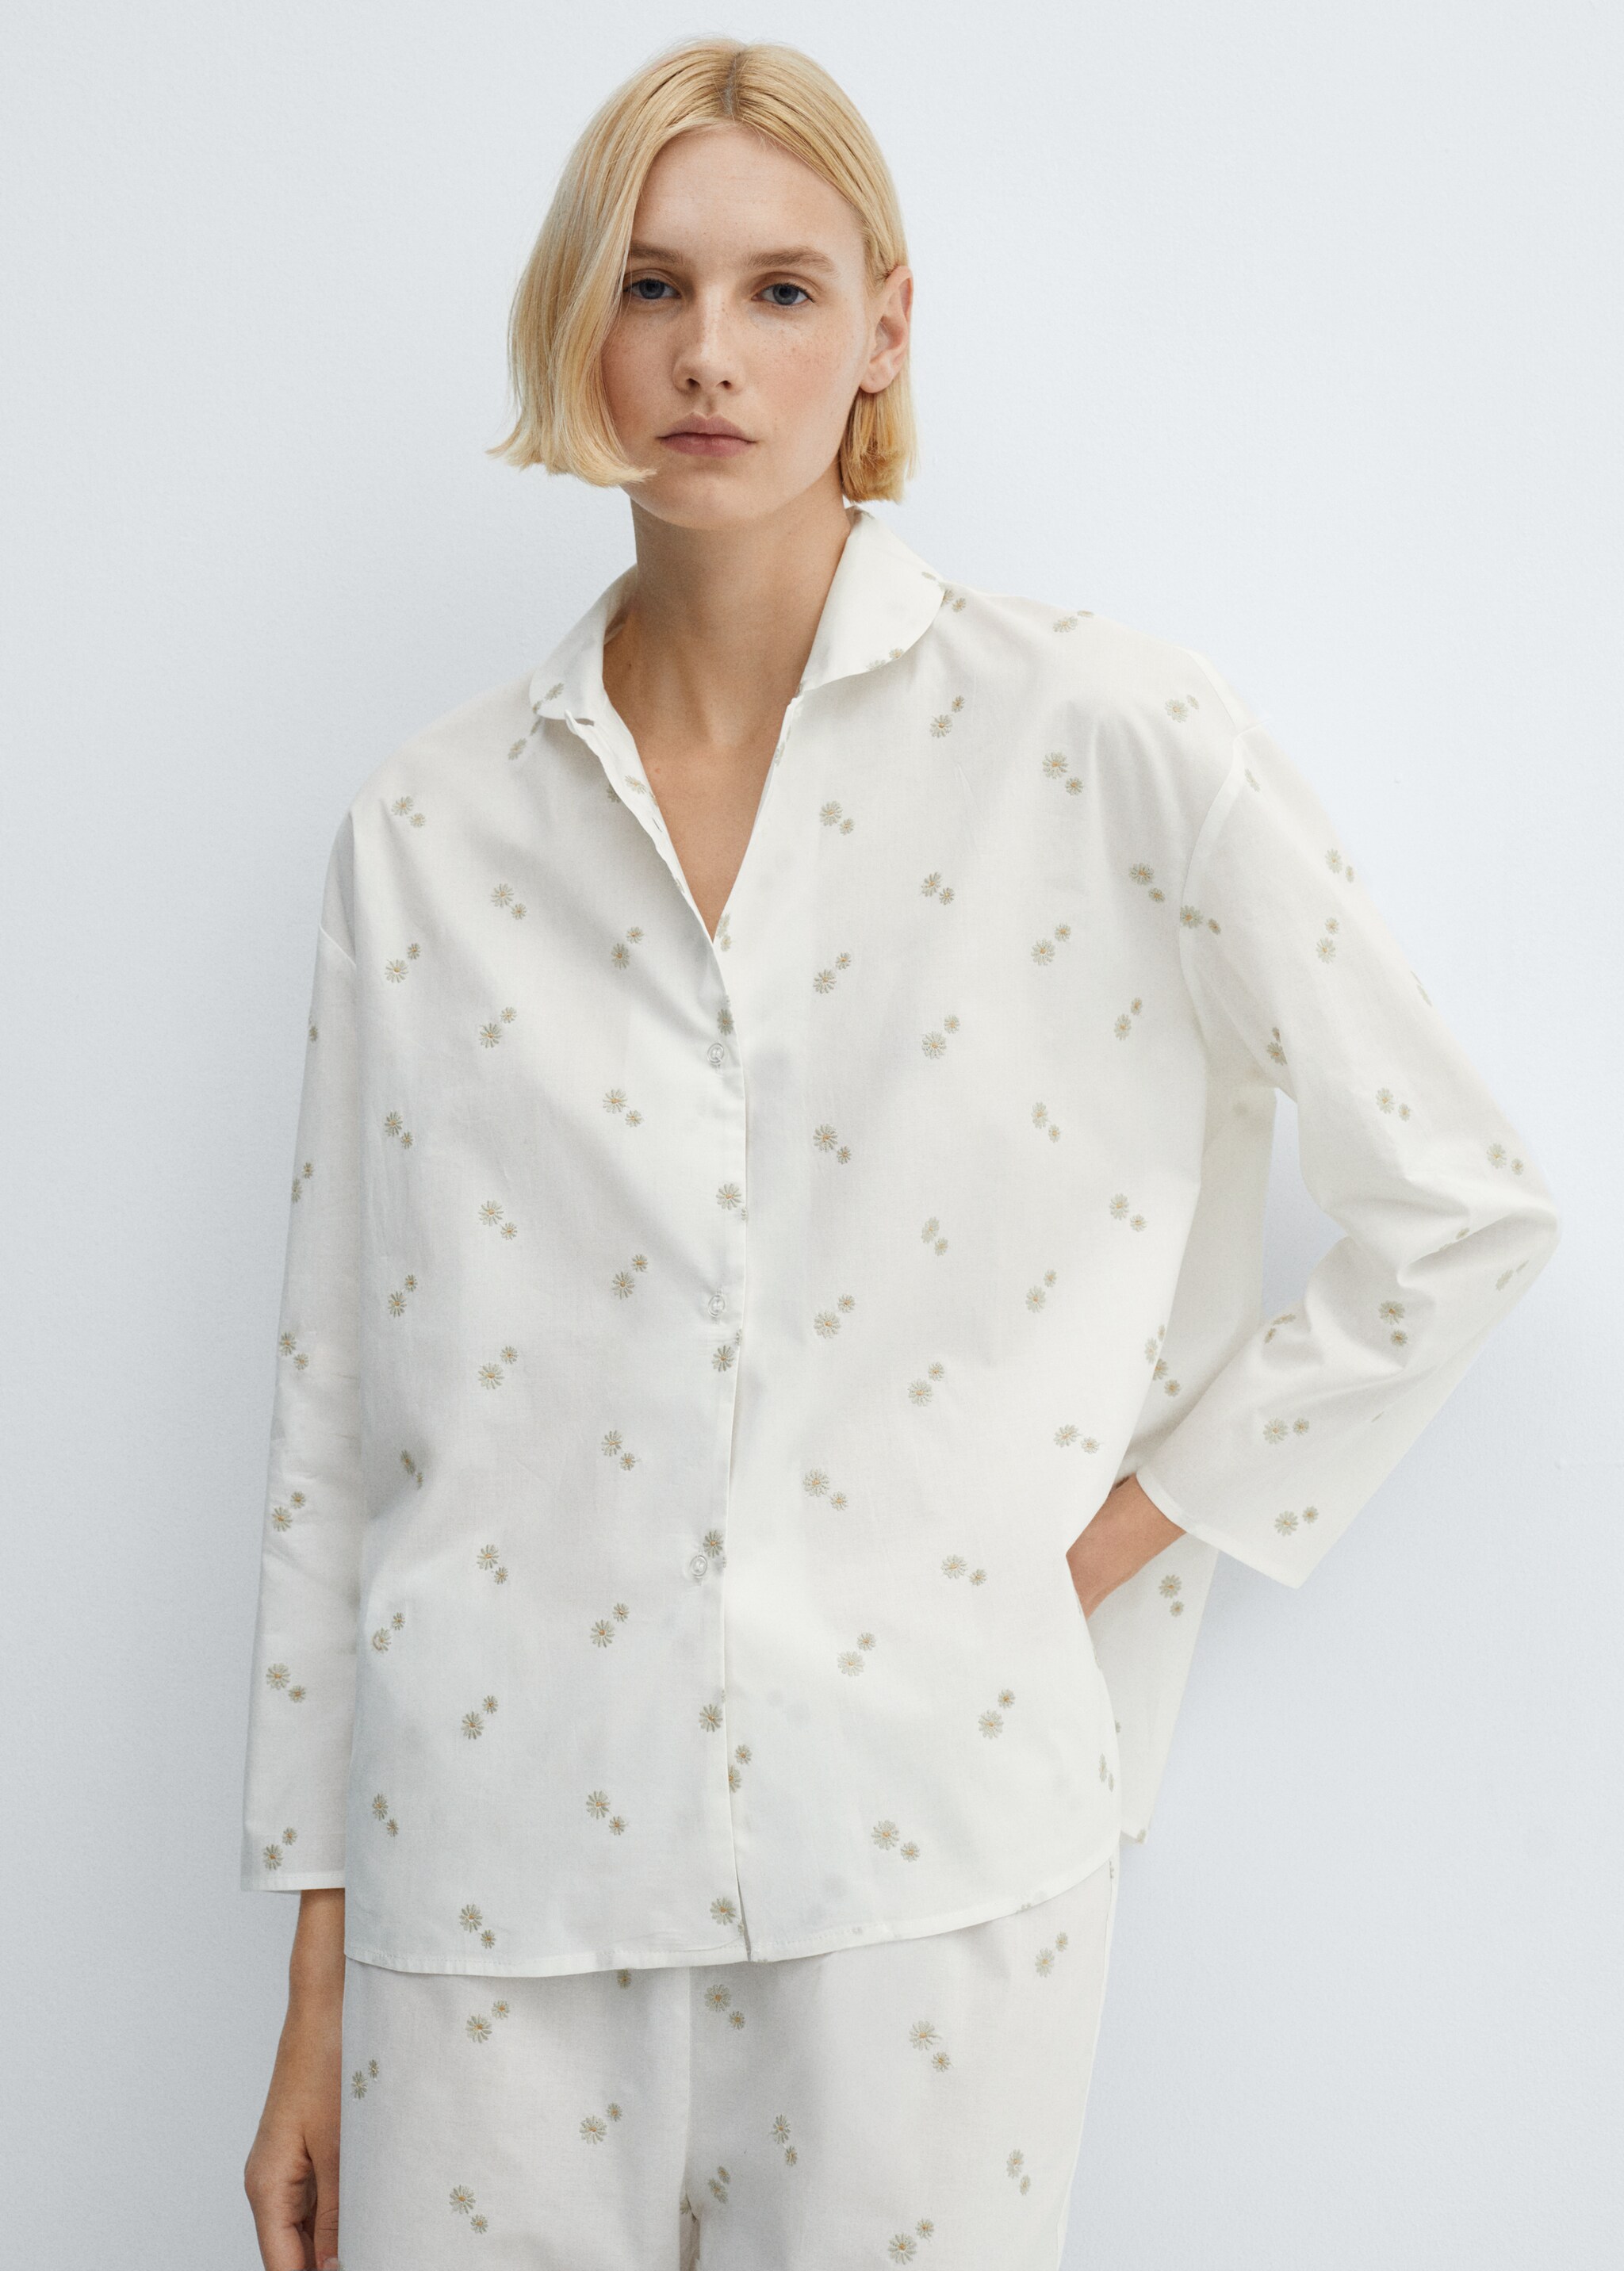 Floral embroidered cotton pyjama shirt - Medium plane